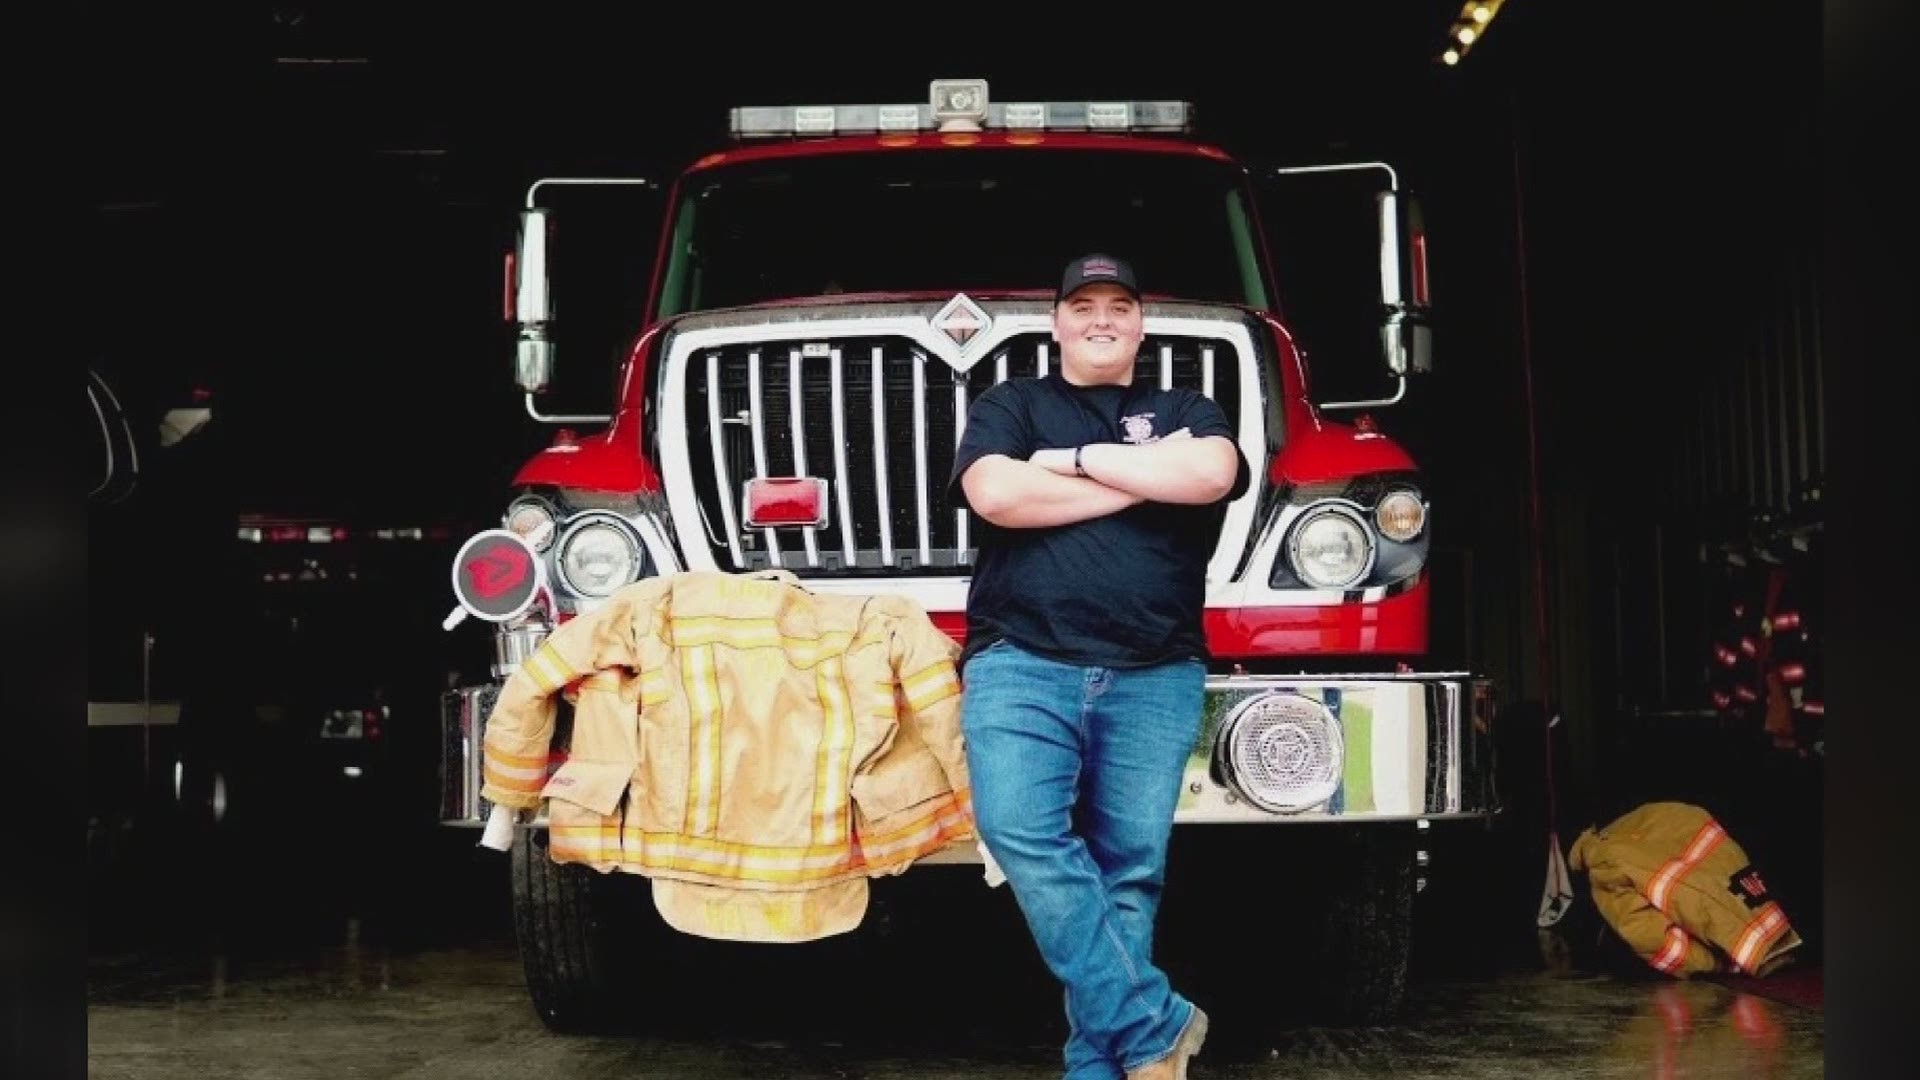 Michael also serves as a volunteer firefighter.